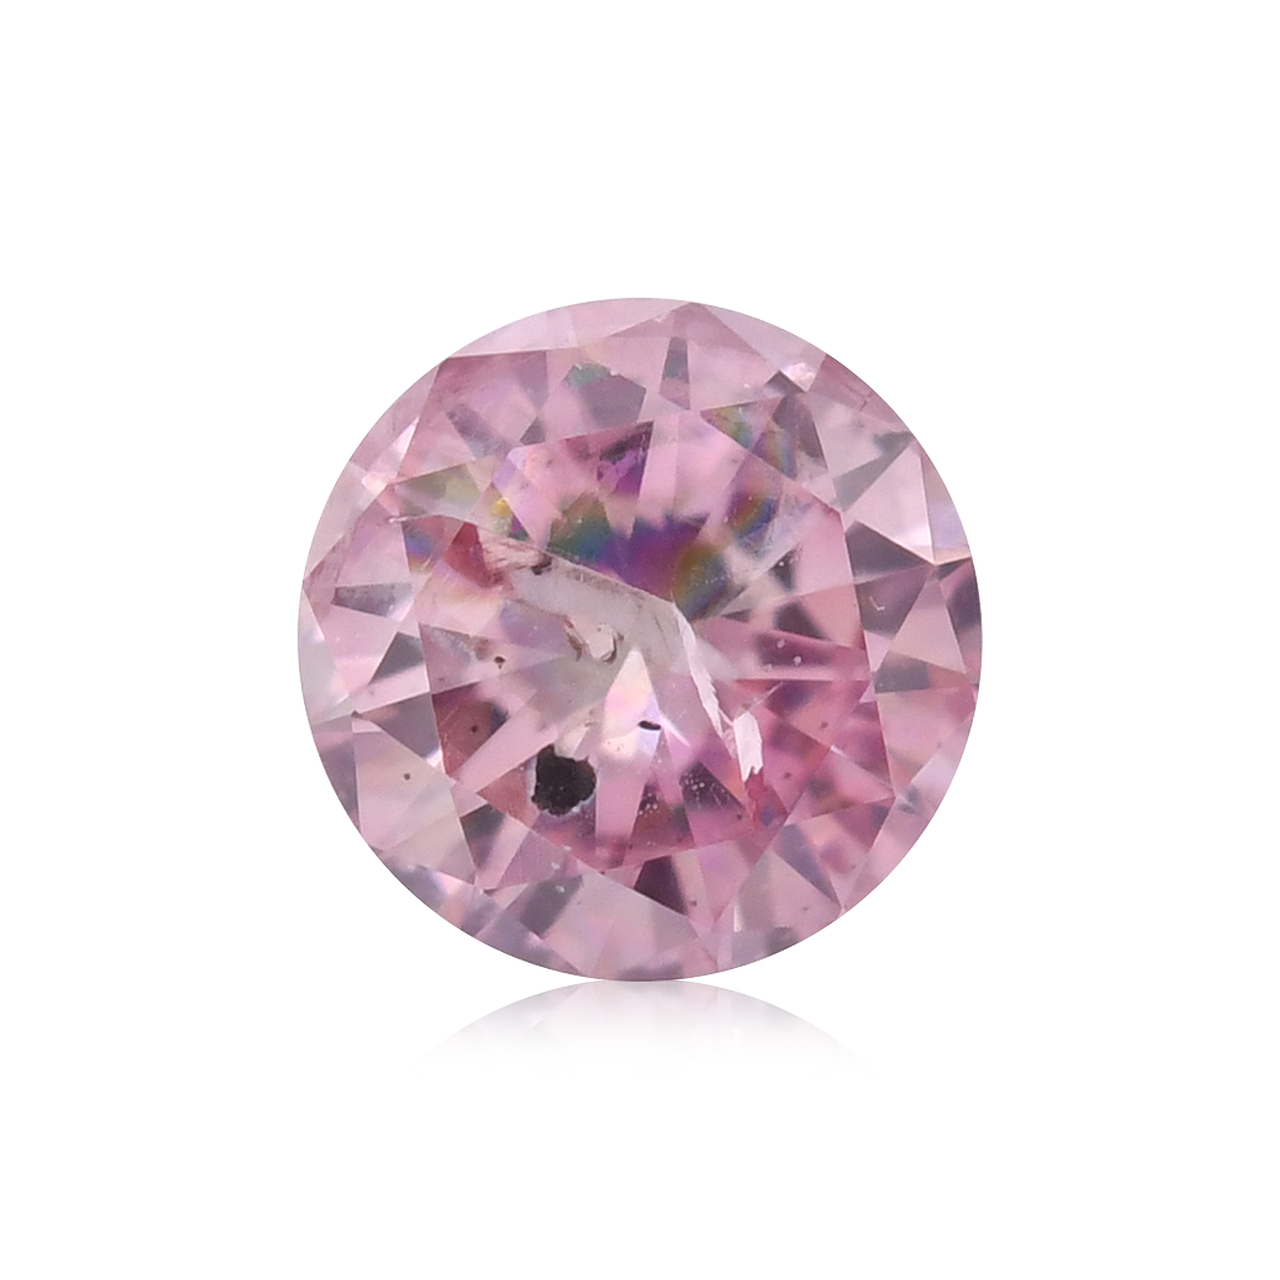 0.11 carat, Fancy Intense Purplish Pink Diamond, Round Shape, (I2) Clarity,  GIA, SKU 457891